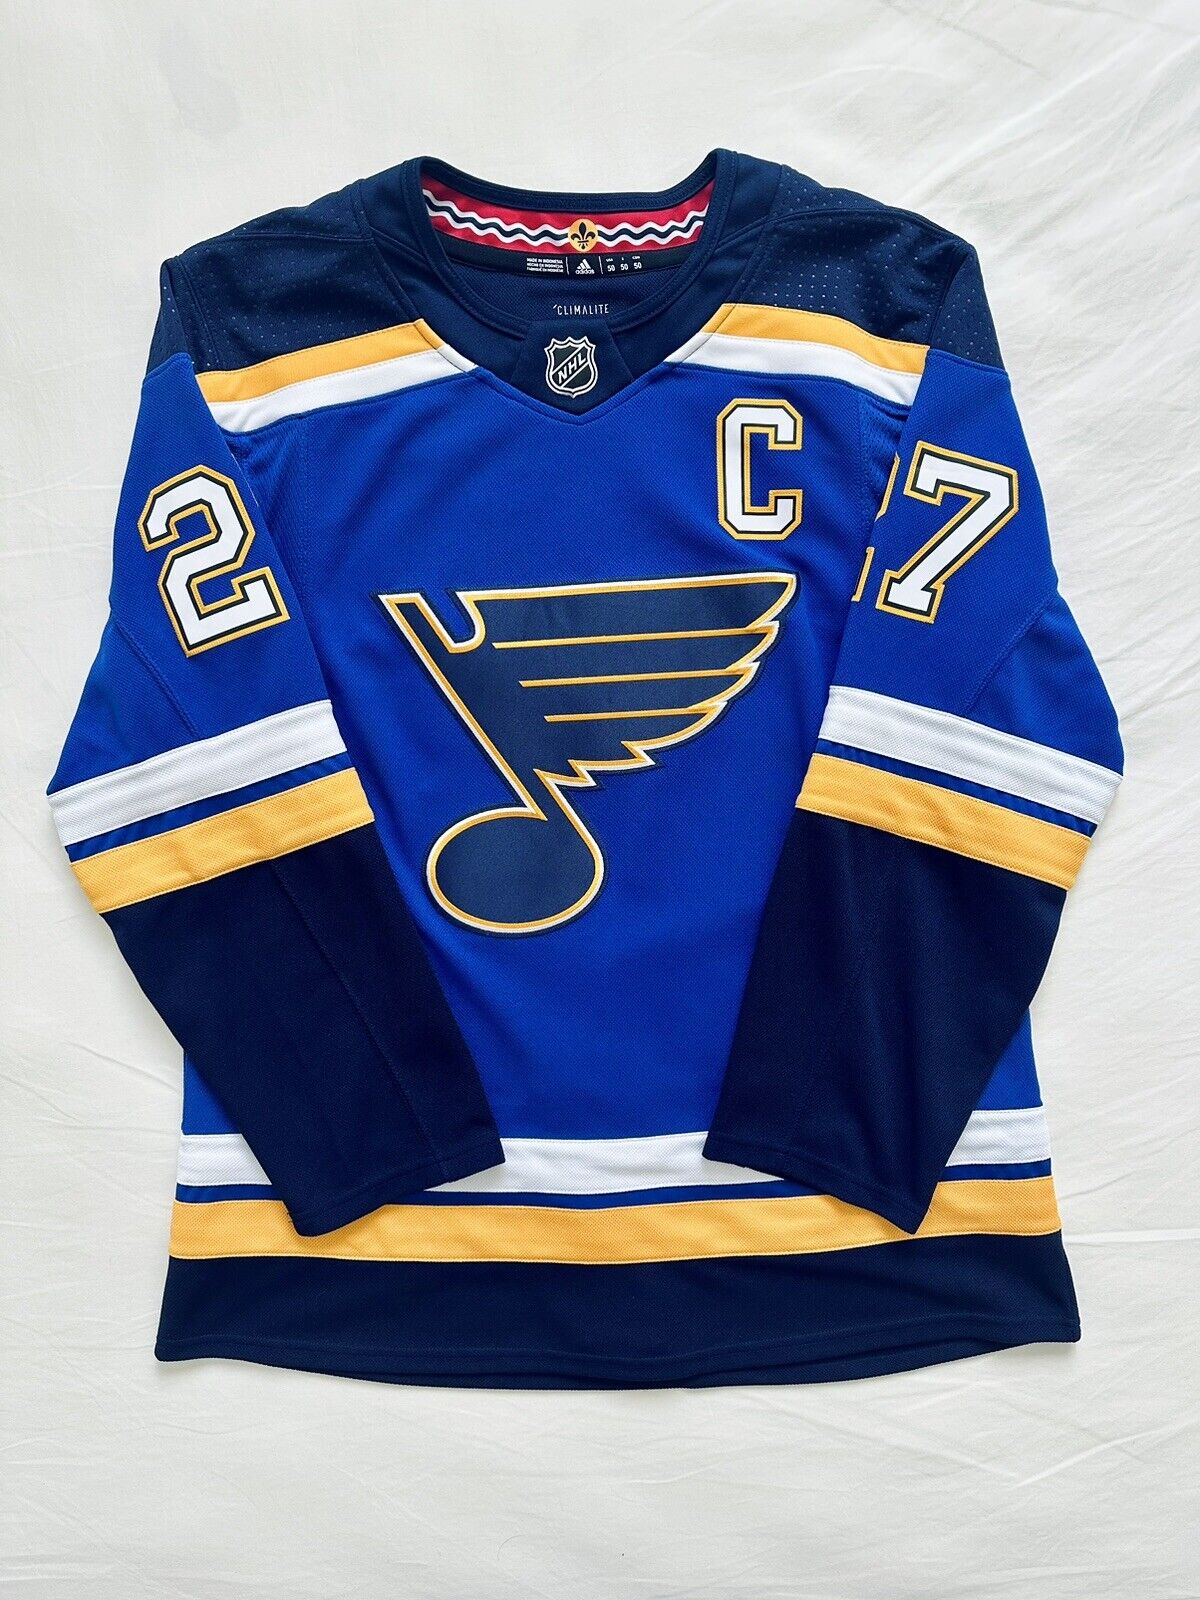 St Louis Blues Pietrangelo NHL Ice Hockey Jersey Adidas Size 50